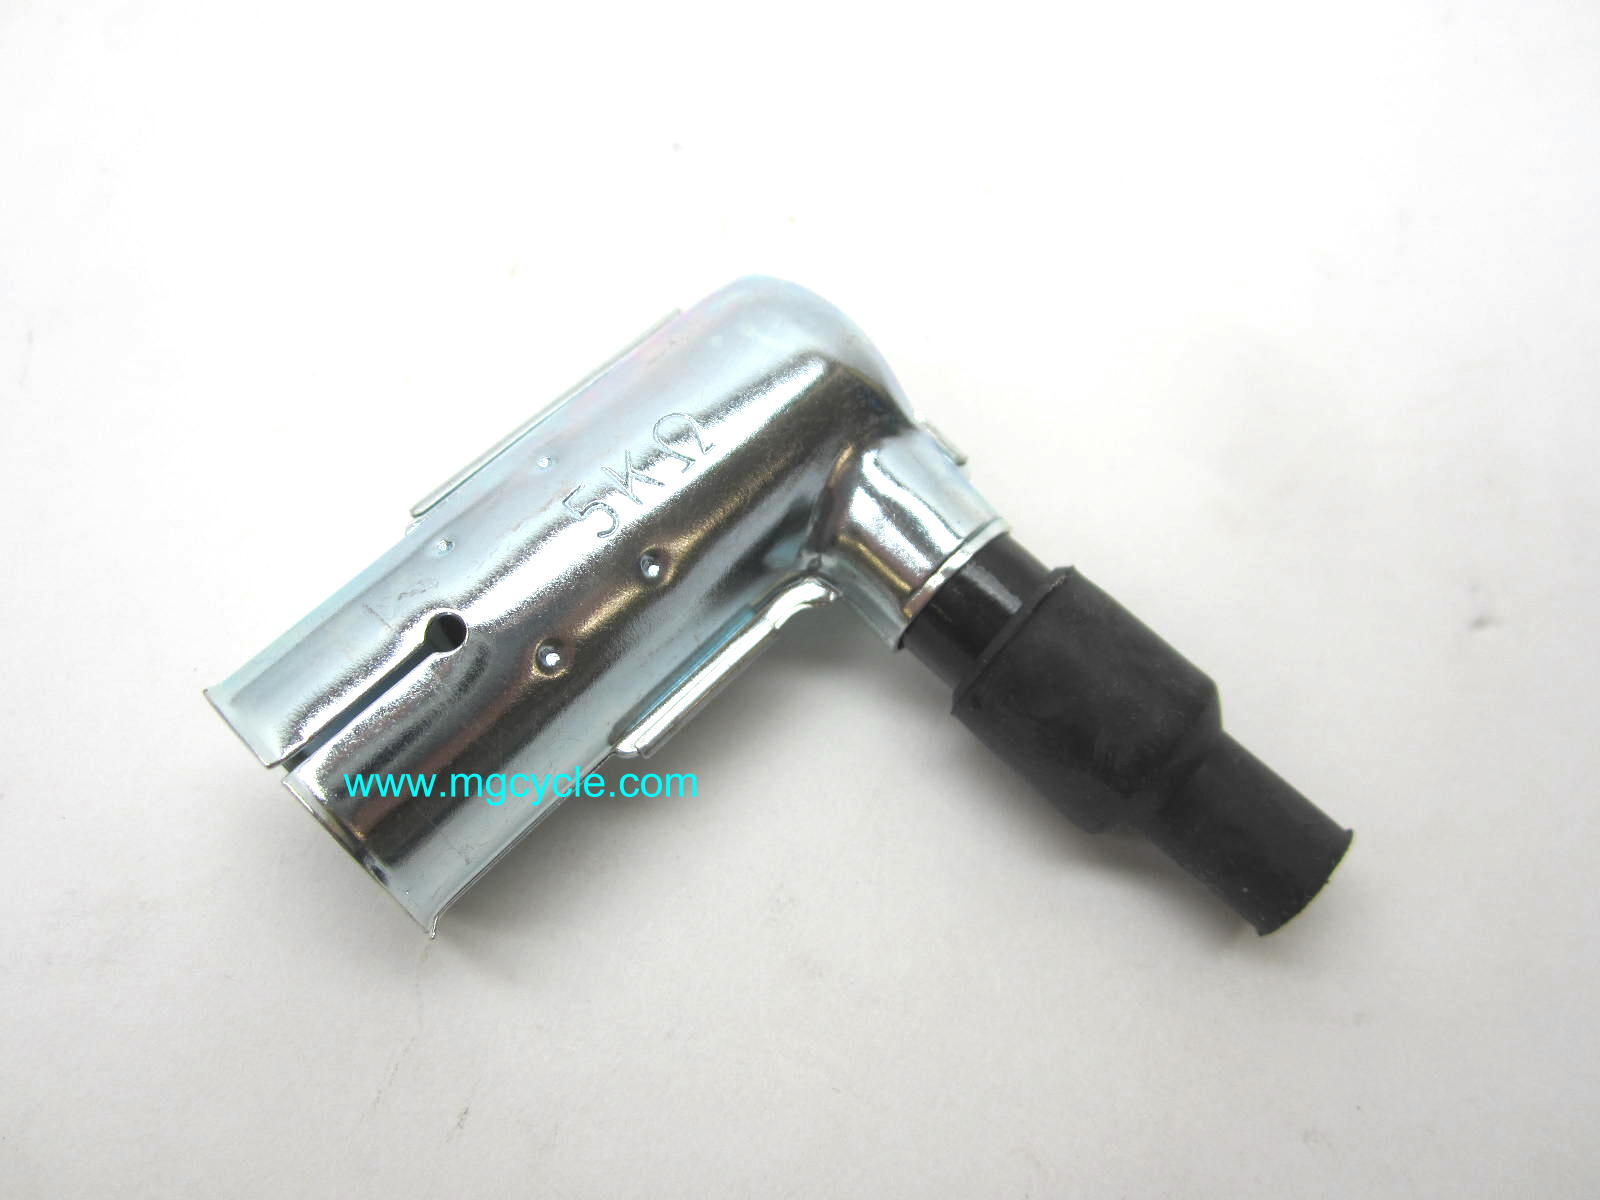 Bosch type metal shielded spark plug cap, 5k ohm - Click Image to Close